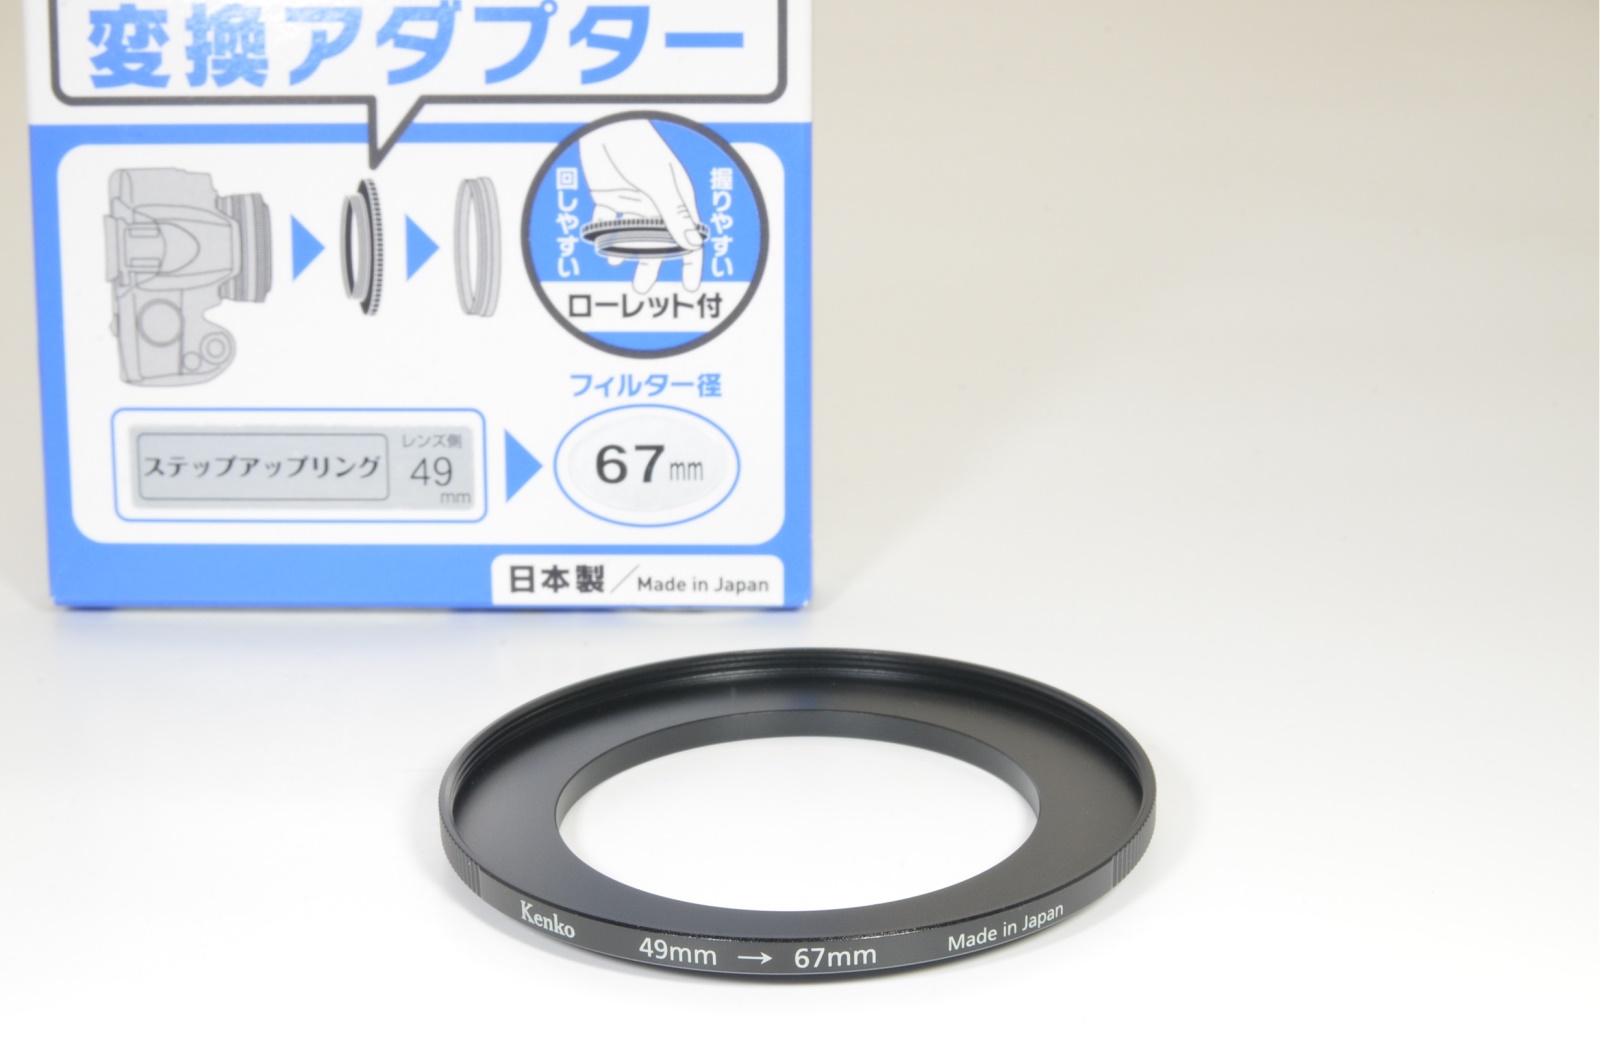 fuji fujifilm tcl-x100 ii tele conversion lens black for x100f x100v